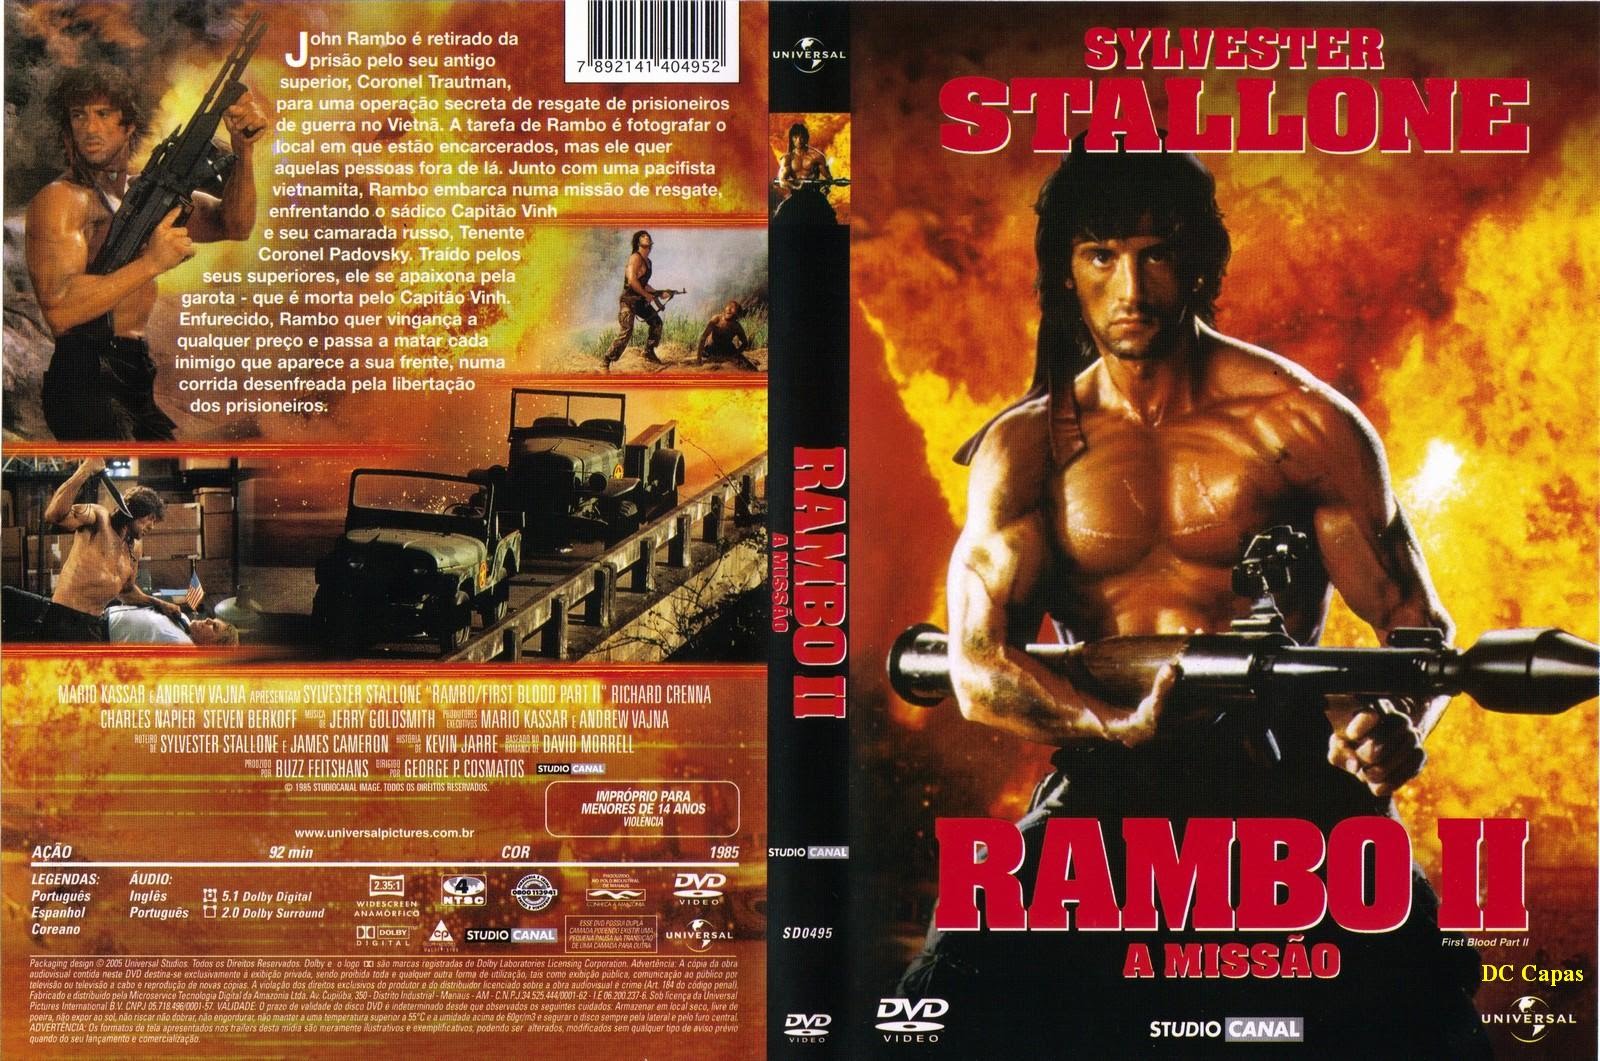 Big Poster Filme Rambo 2 LO001 Tamanho 90x60 cm